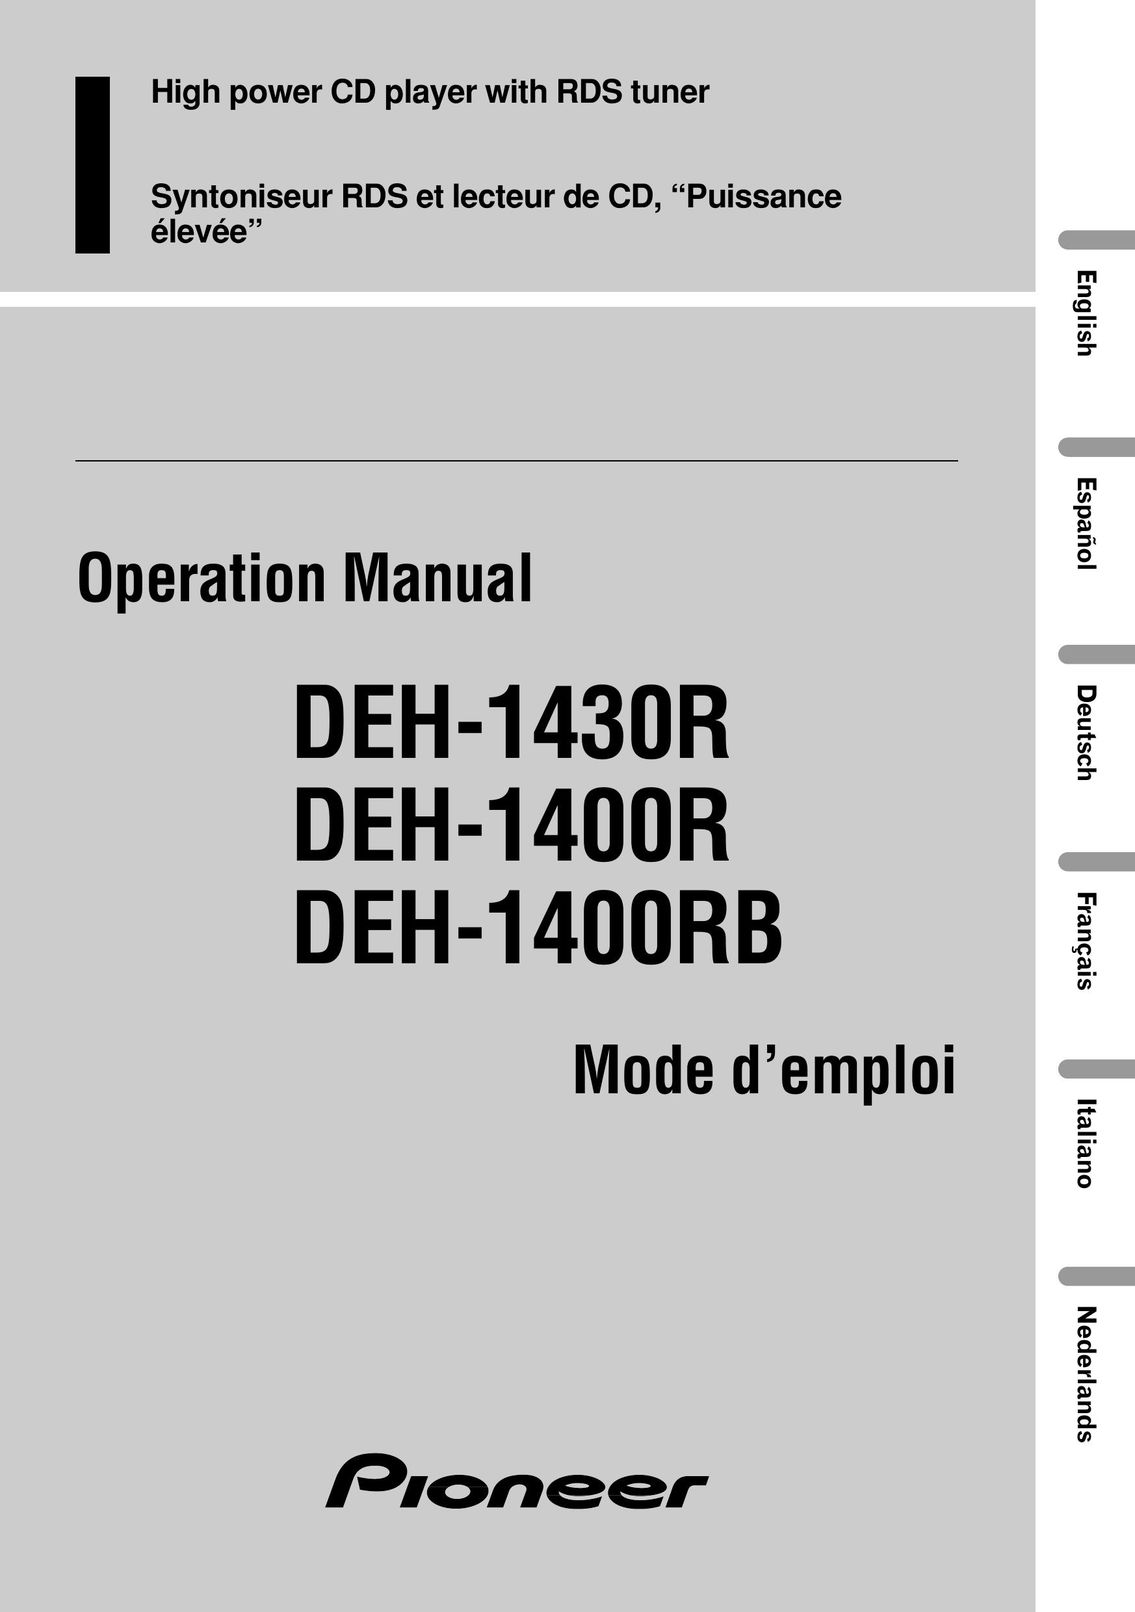 Pioneer DEH-1400RB CD Player User Manual